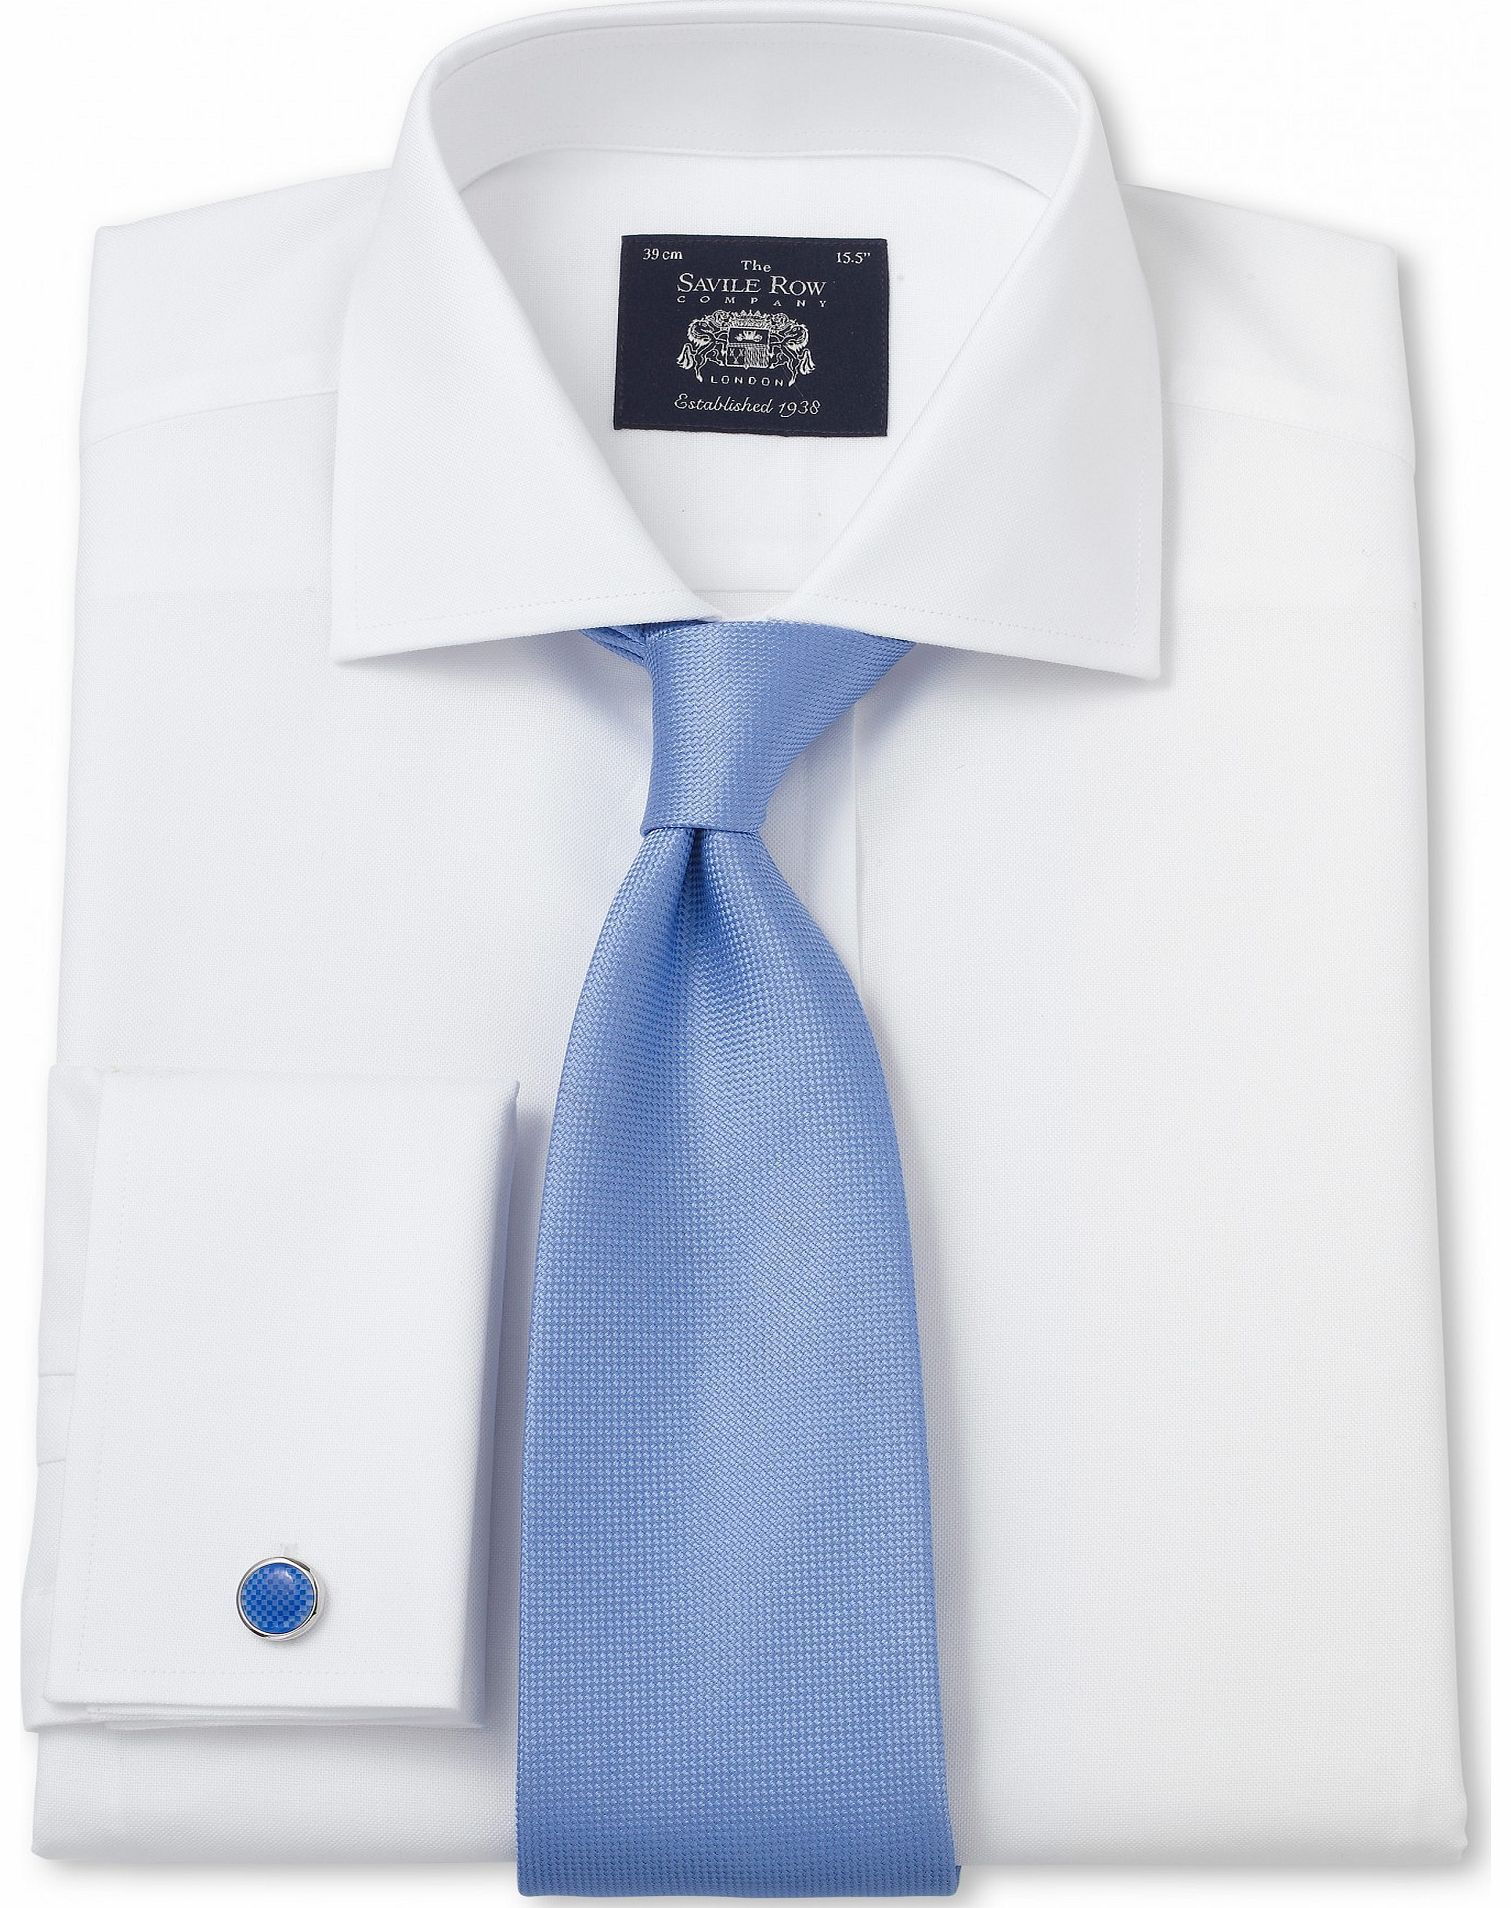 Savile Row Company White Pinpoint Slim Fit Shirt 15 1/2`` Standard